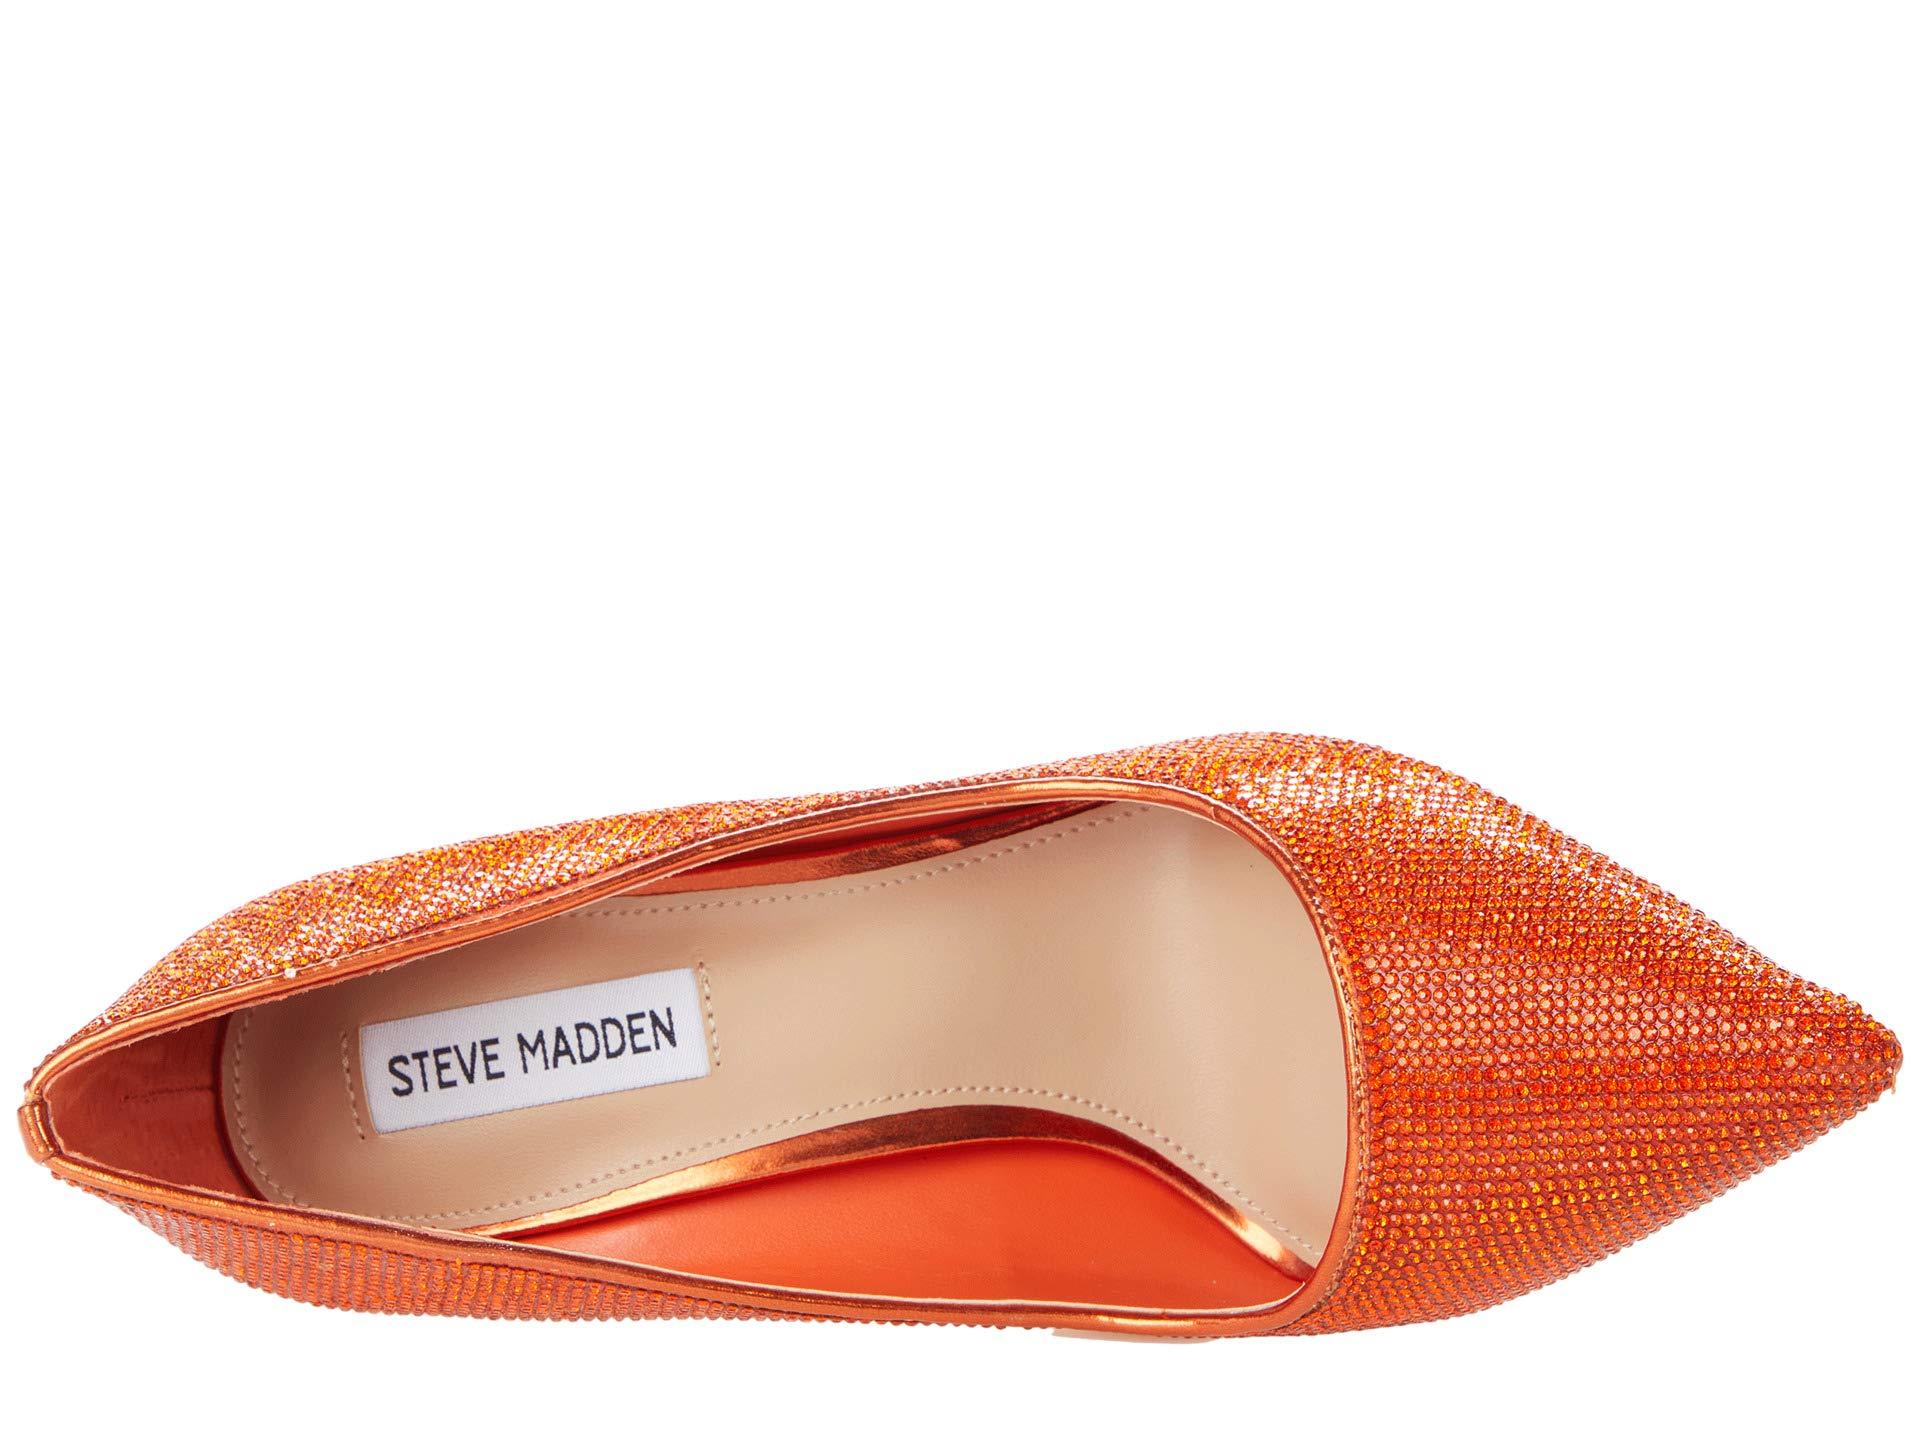 Steve Madden Vivacious Pump Shoes in Orange | Lyst